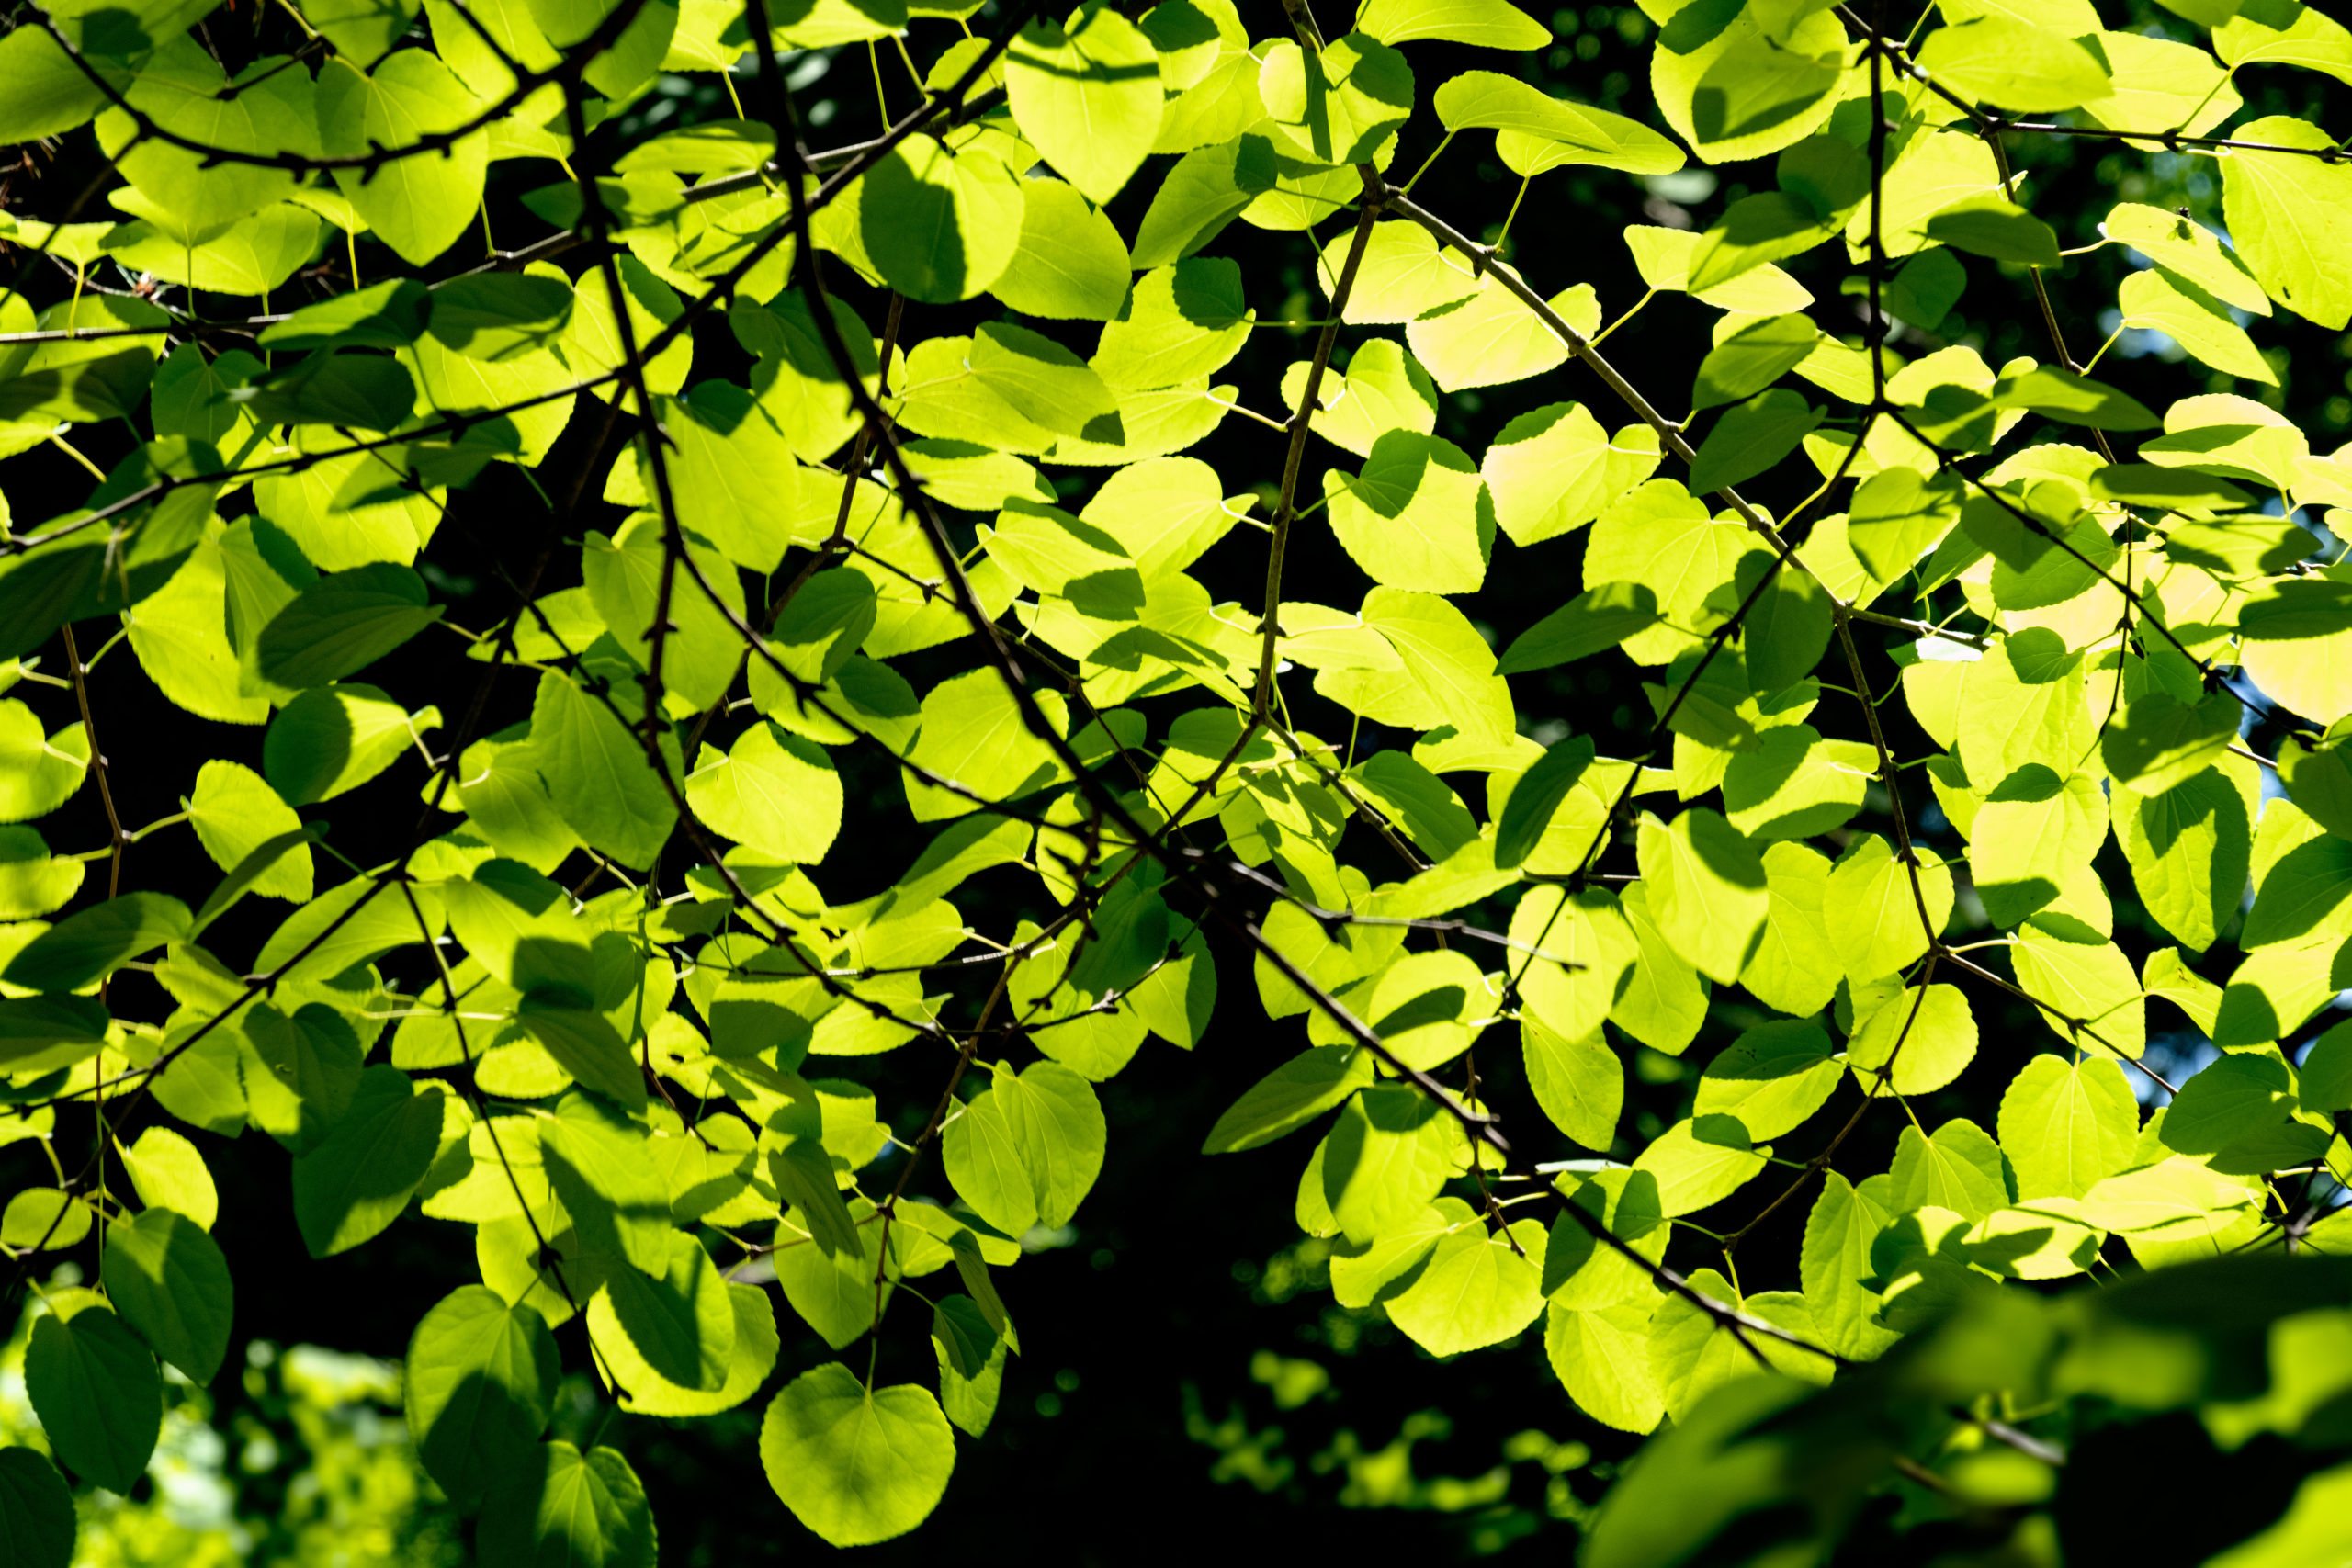 colourt photo of yellow green katsura leaves